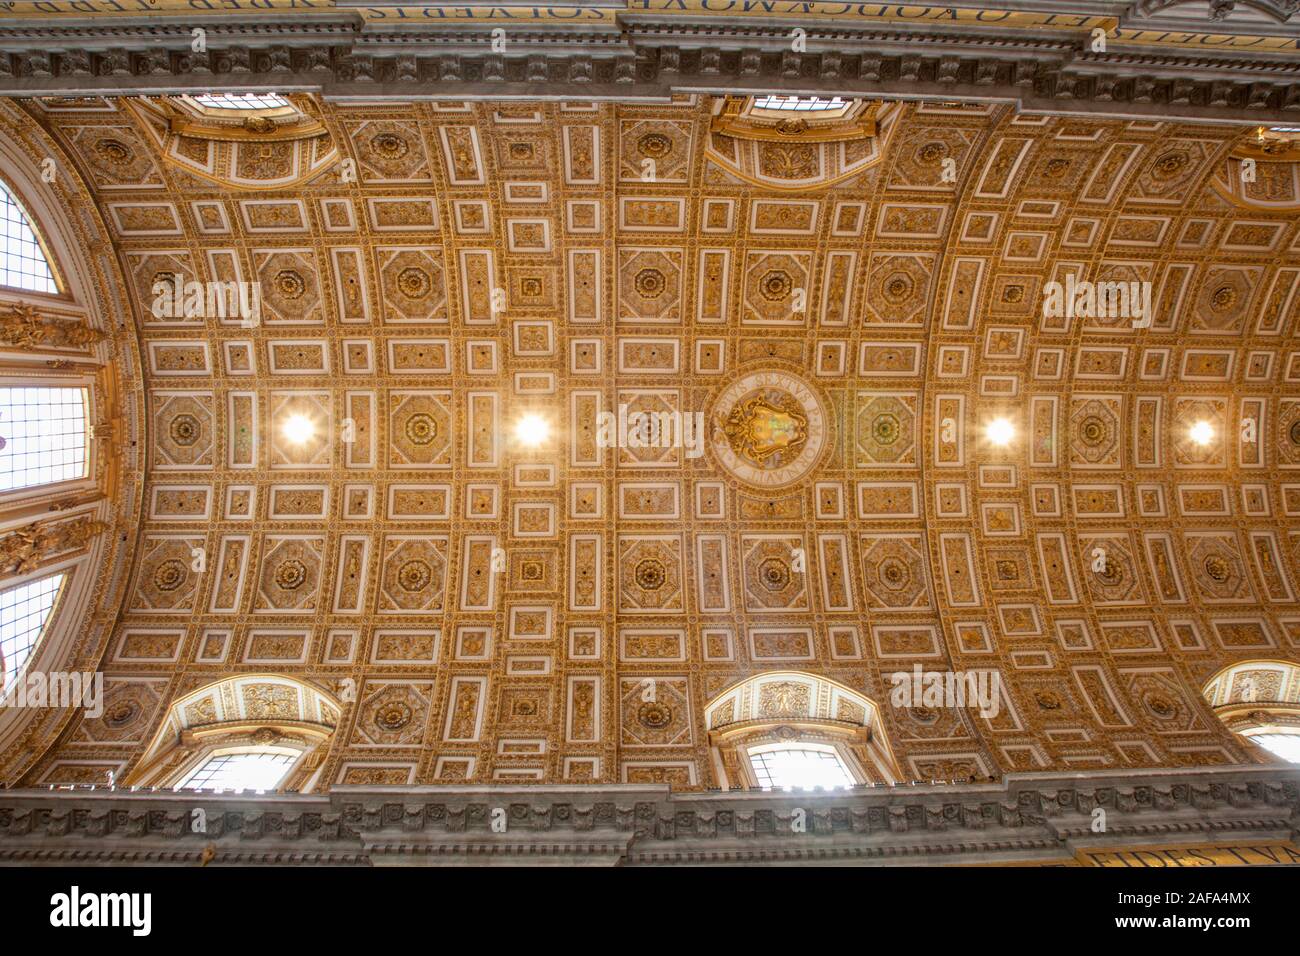 Roof details inside St. Peter's Basilica, Vatican City, Rome Stock Photo